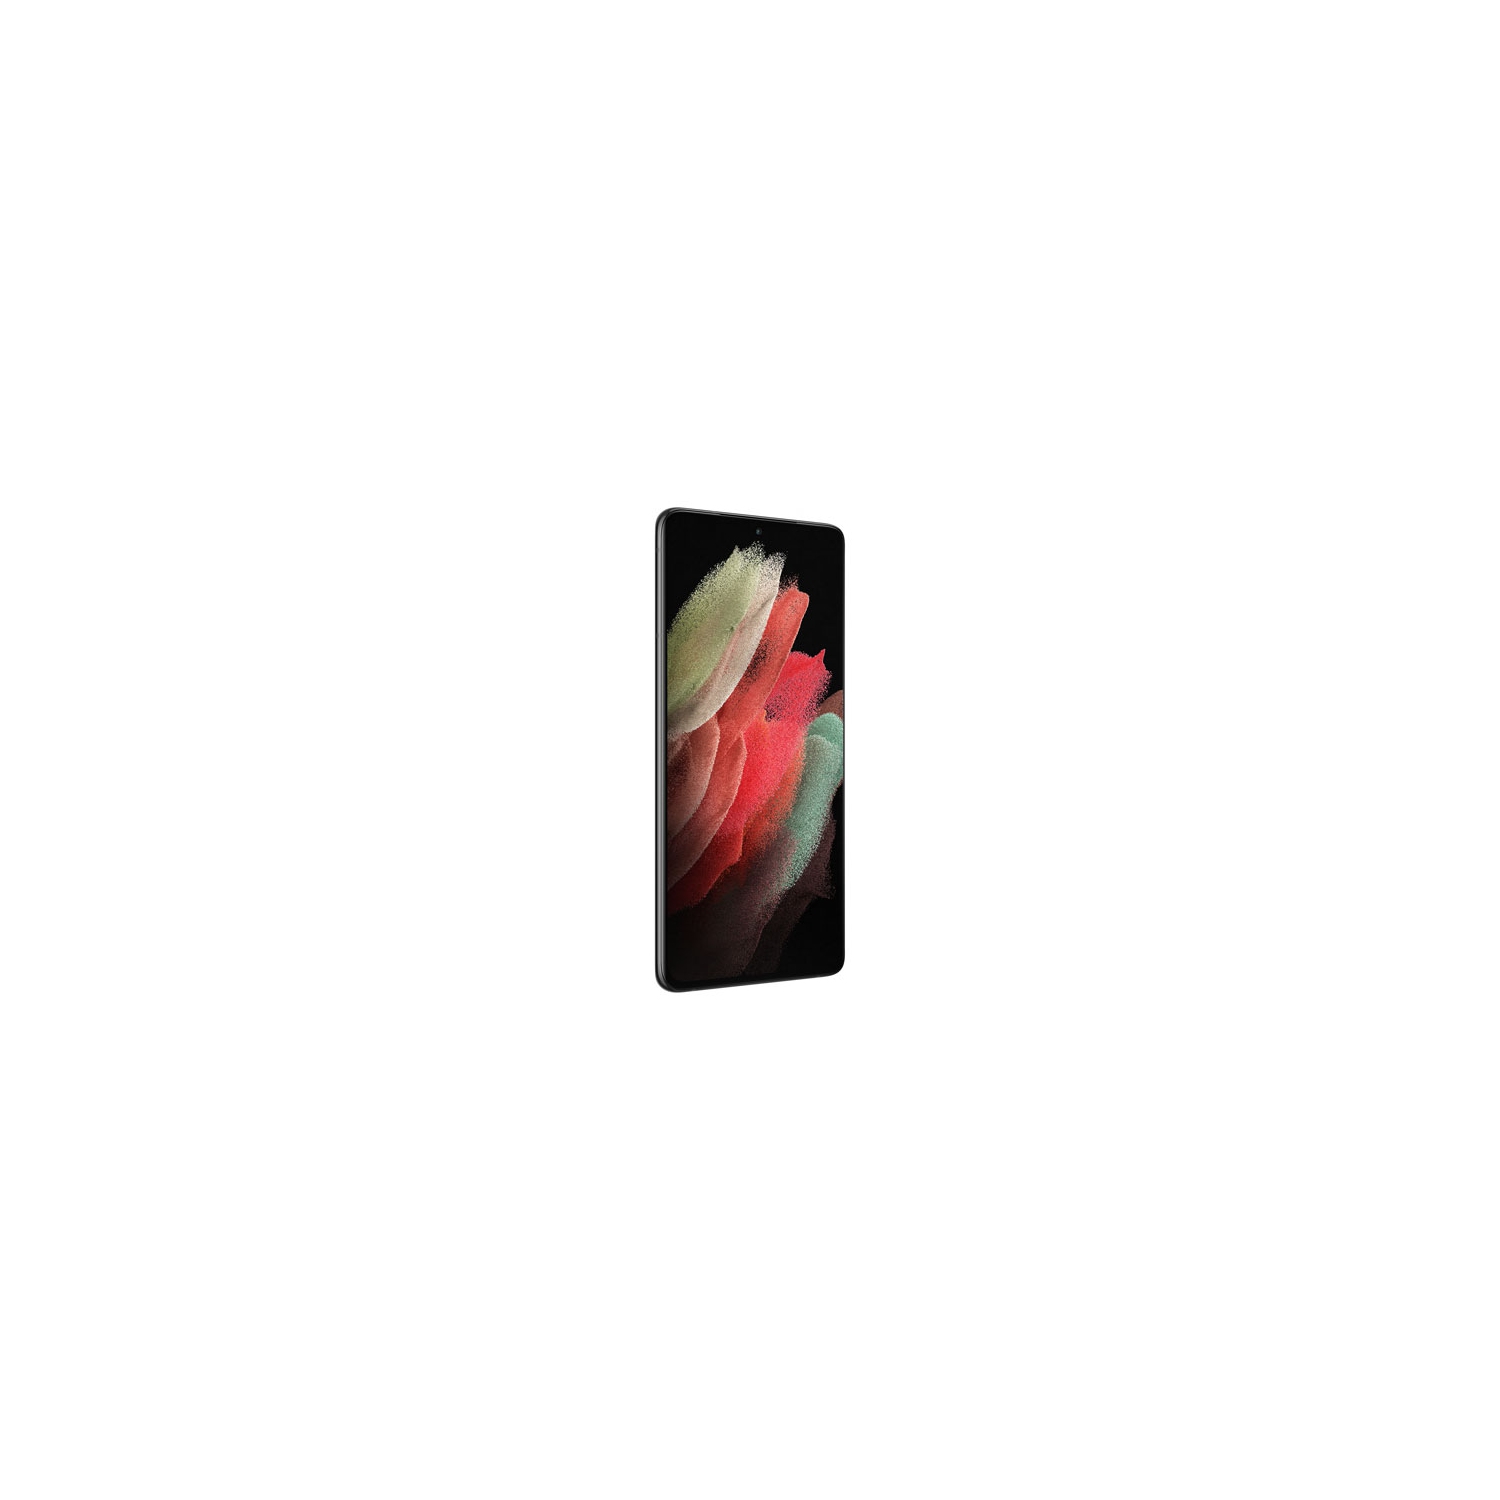 Refurbished (Good) - Samsung Galaxy S21 Ultra 5G 512GB - Phantom Black - Unlocked